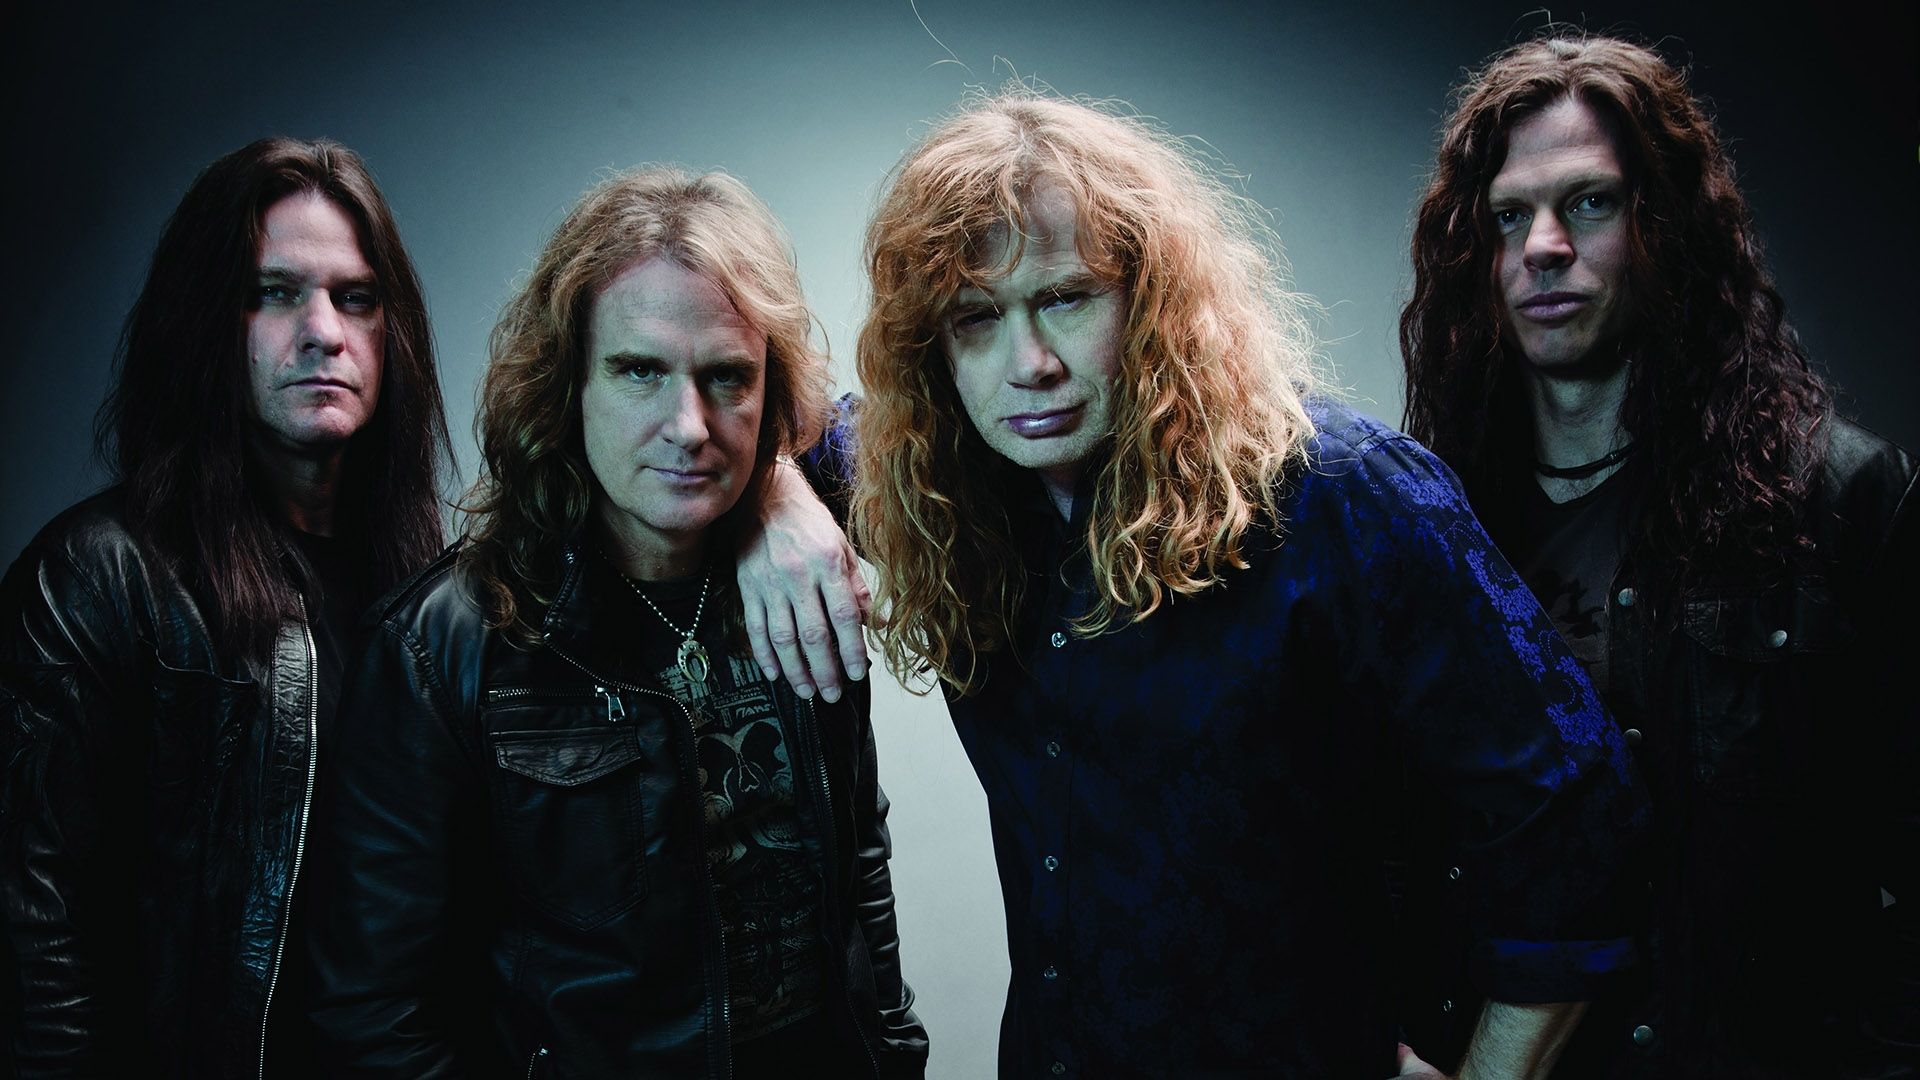 Download Wallpaper 1920x1080 Megadeth, Band, Hair, Look, Jackets ...